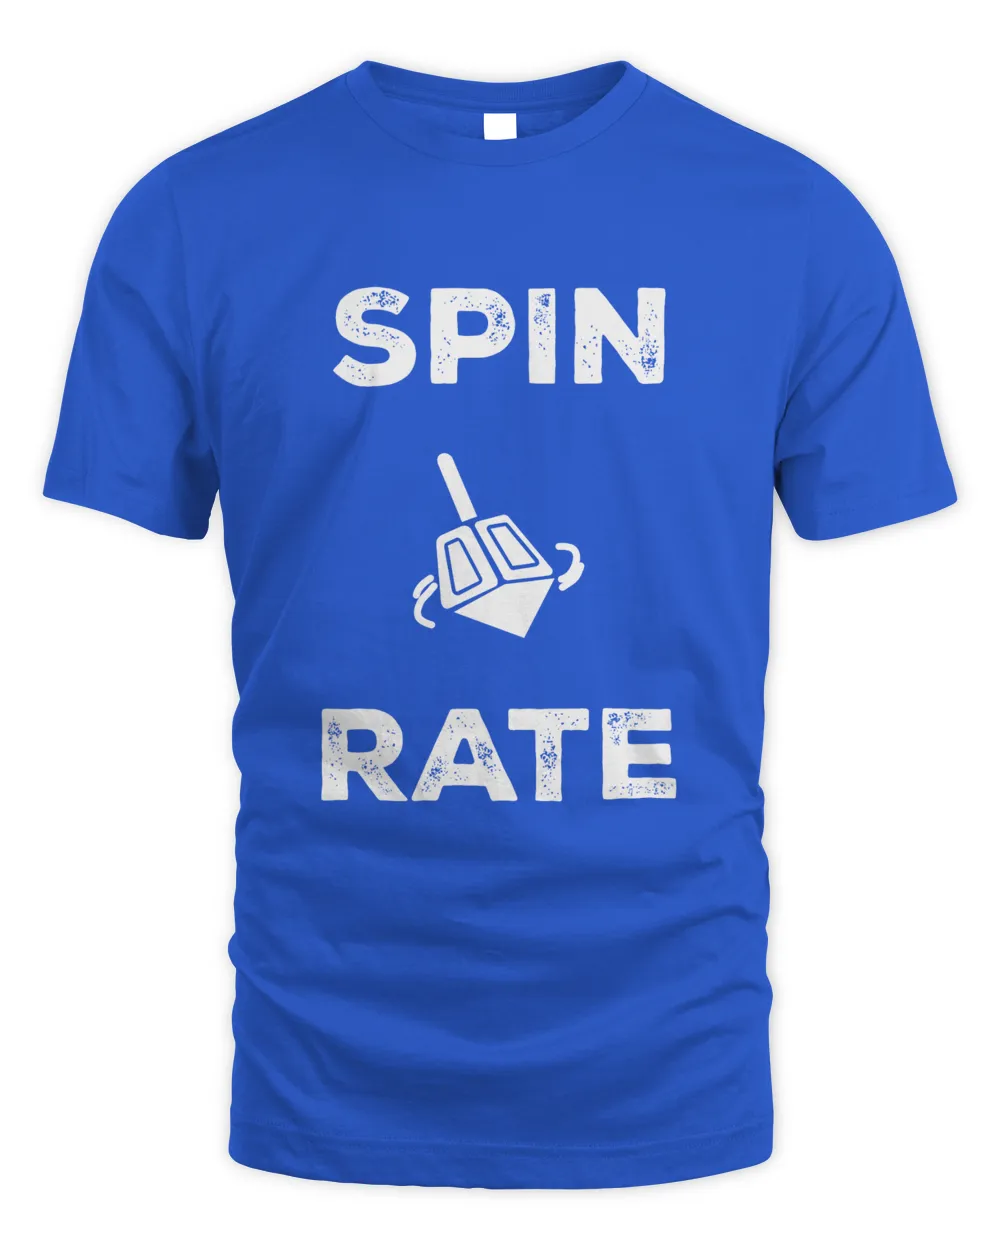 Spin Rate Israel Baseball Shirt Unisex Standard T-Shirt royal 